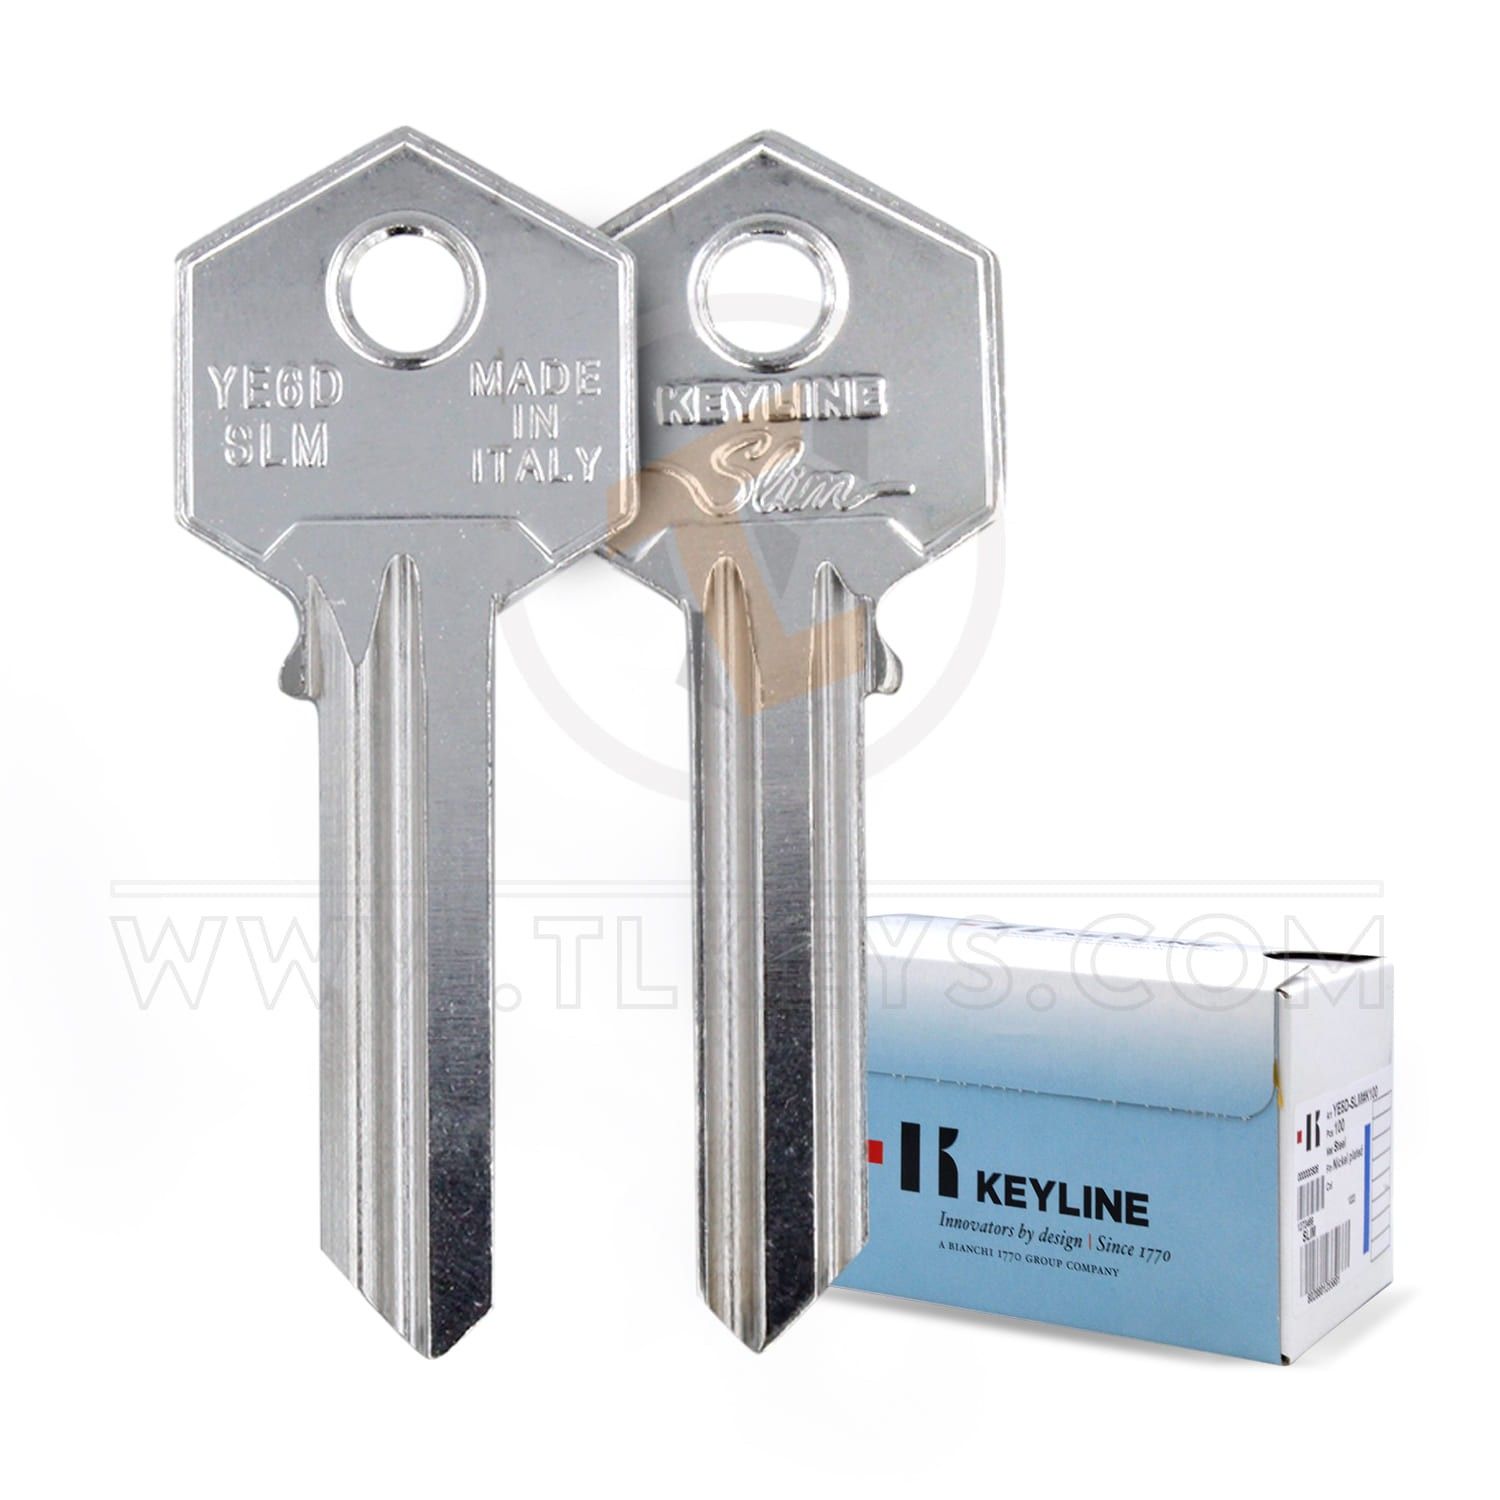 Keyline Door Keys P/N:YE6D SLM Compatible P/N:YA31 Compatible Part Number YA31